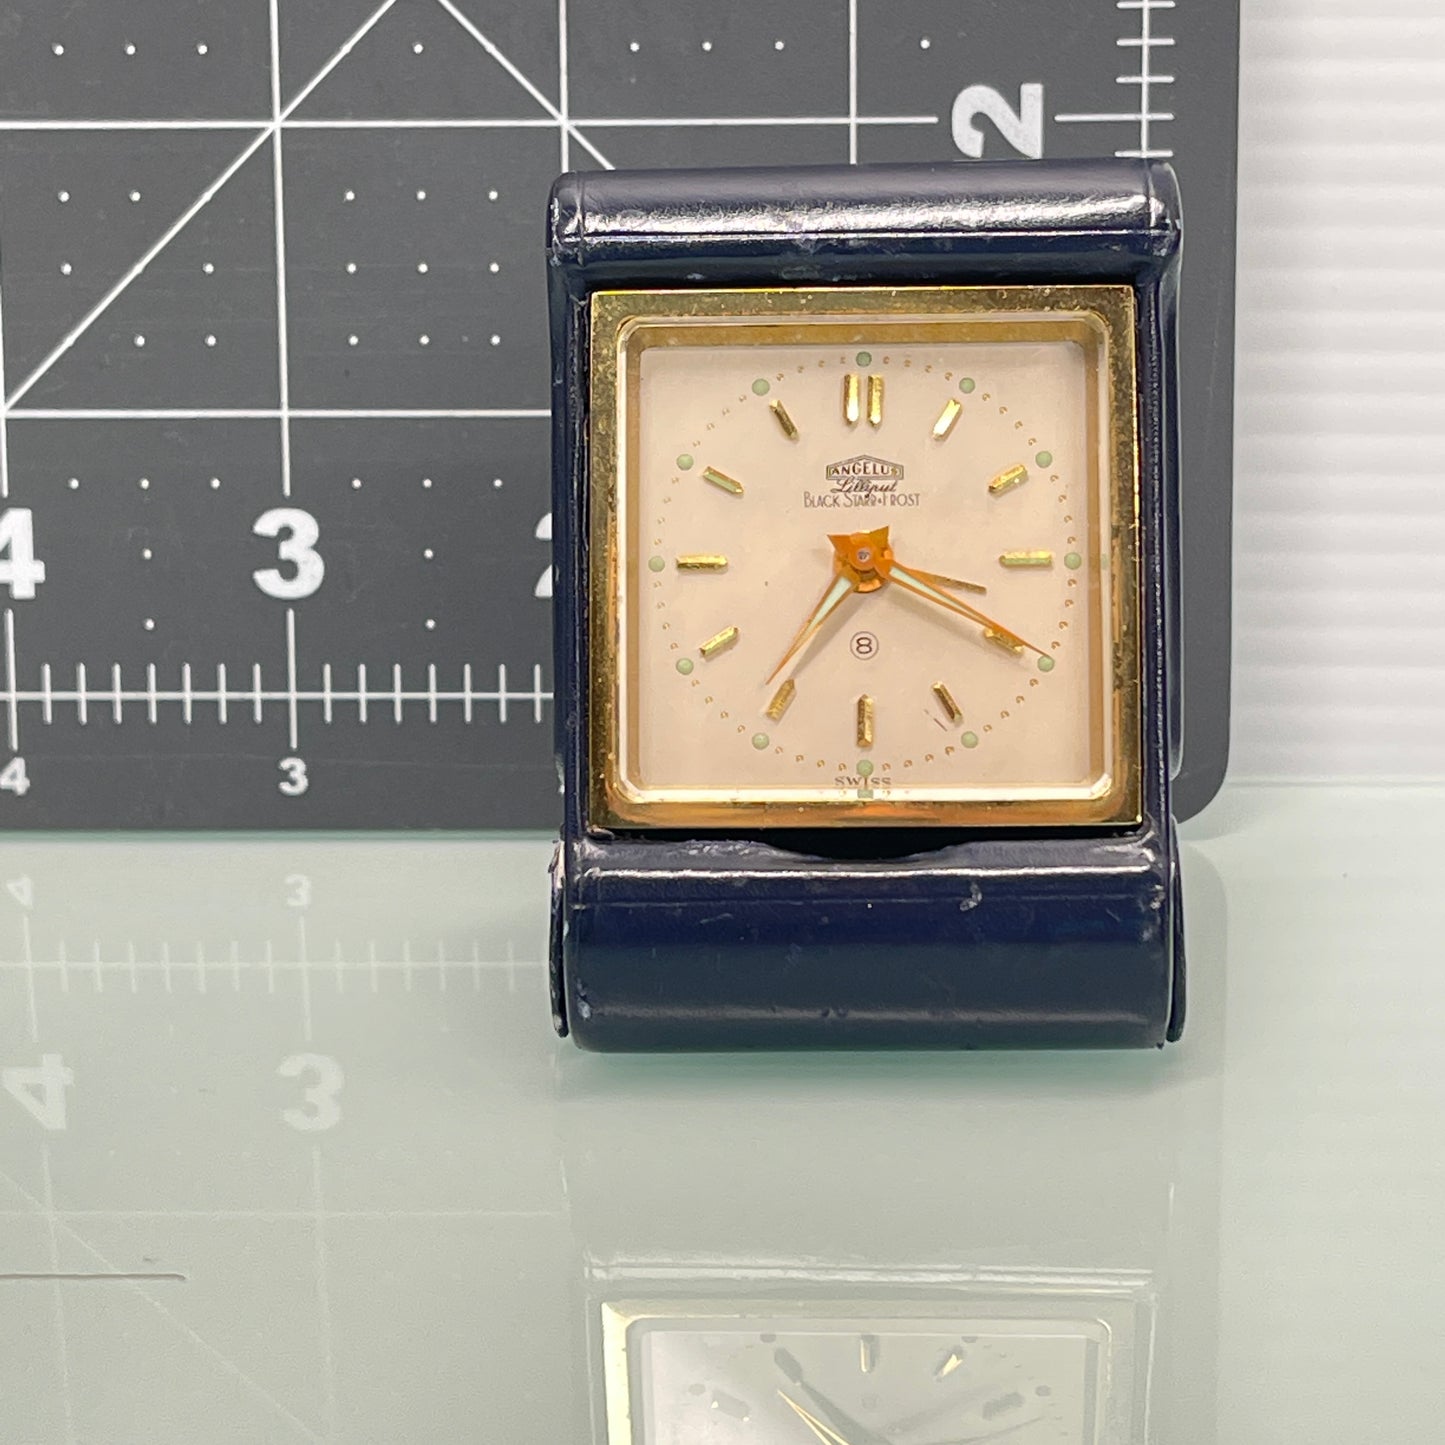 Angelus Lilliput Pocket Travel Alarm Clock branded by Black, Starr & Frost c.1930